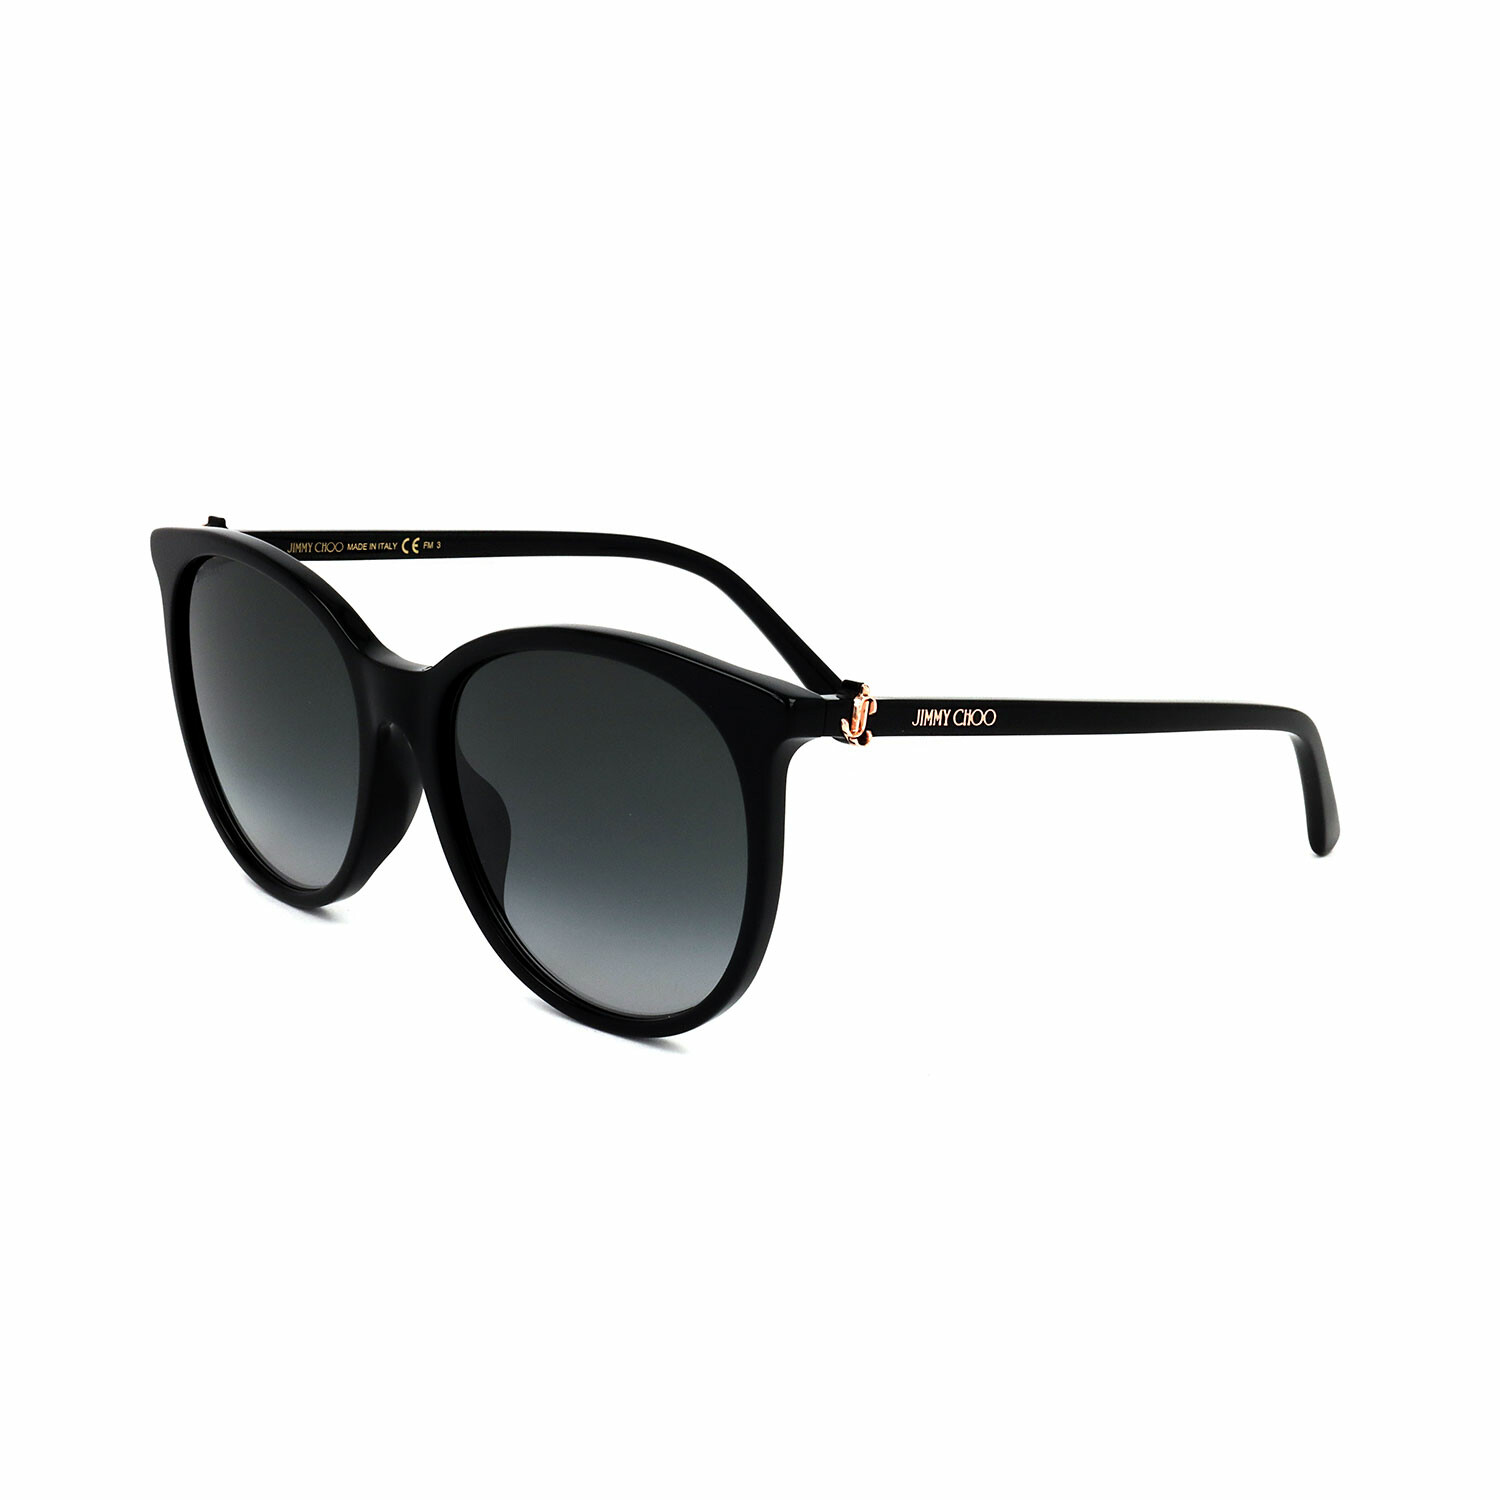 Women's Sunglasses // Ilana FSK 26S - Jimmy Choo Sunglasses For Her ...